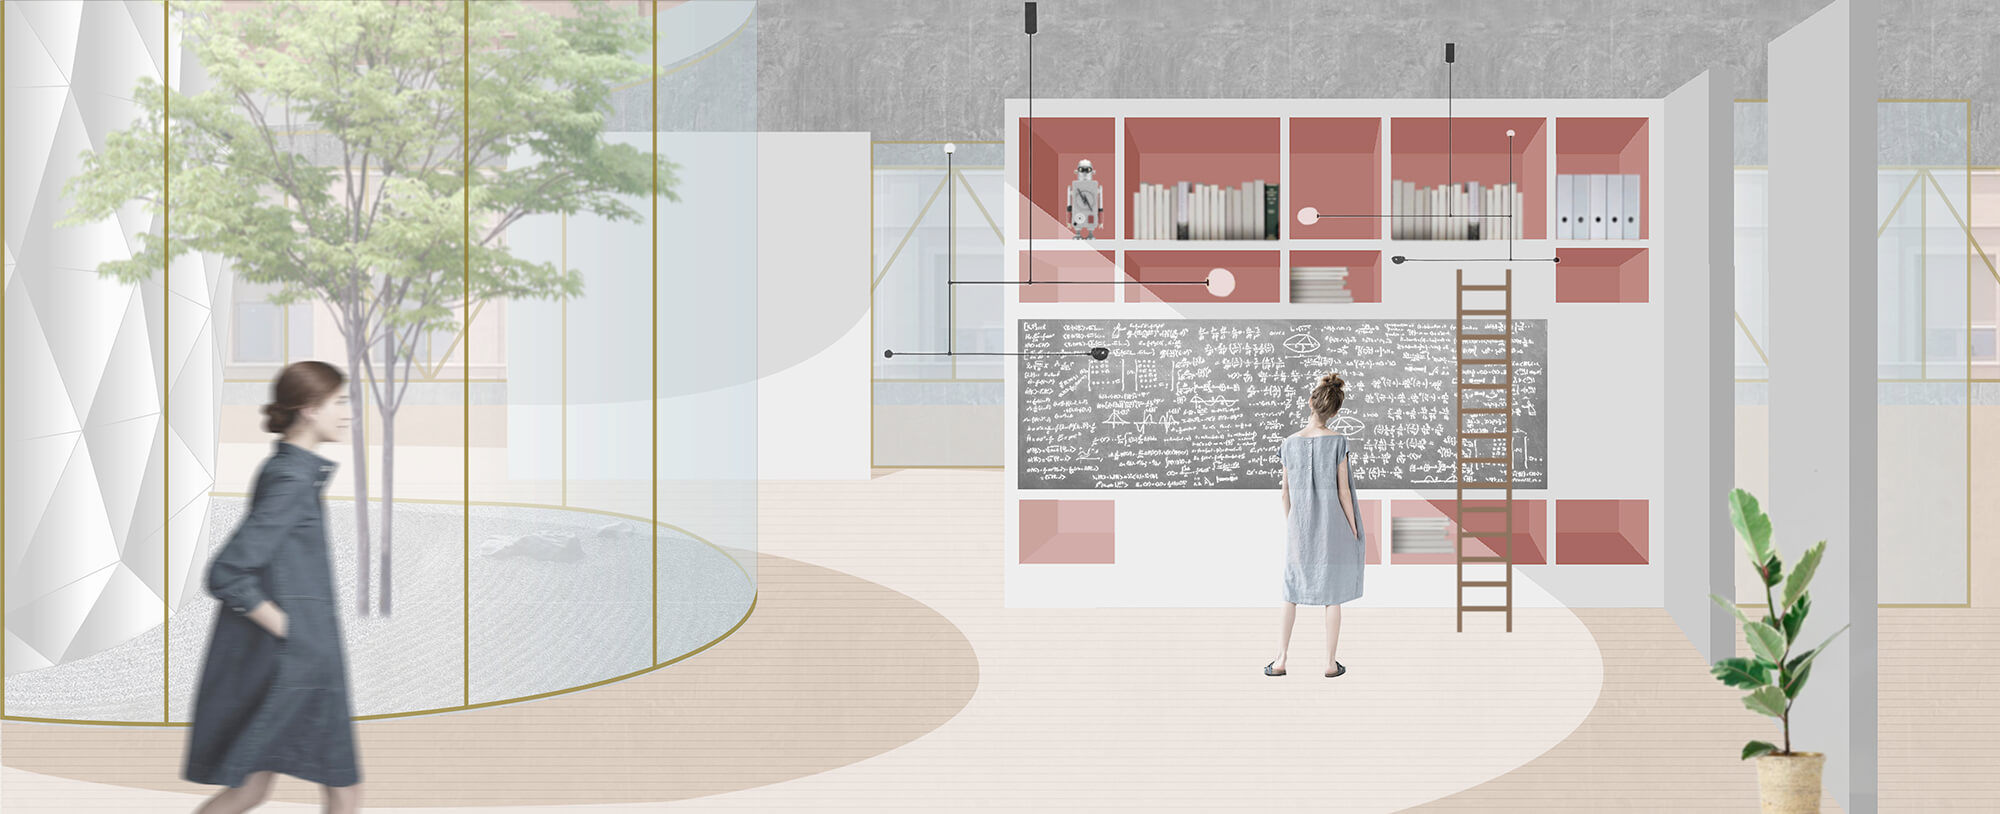 studio-d-architettura-Tip-of-Iceberg-render-interno-patio